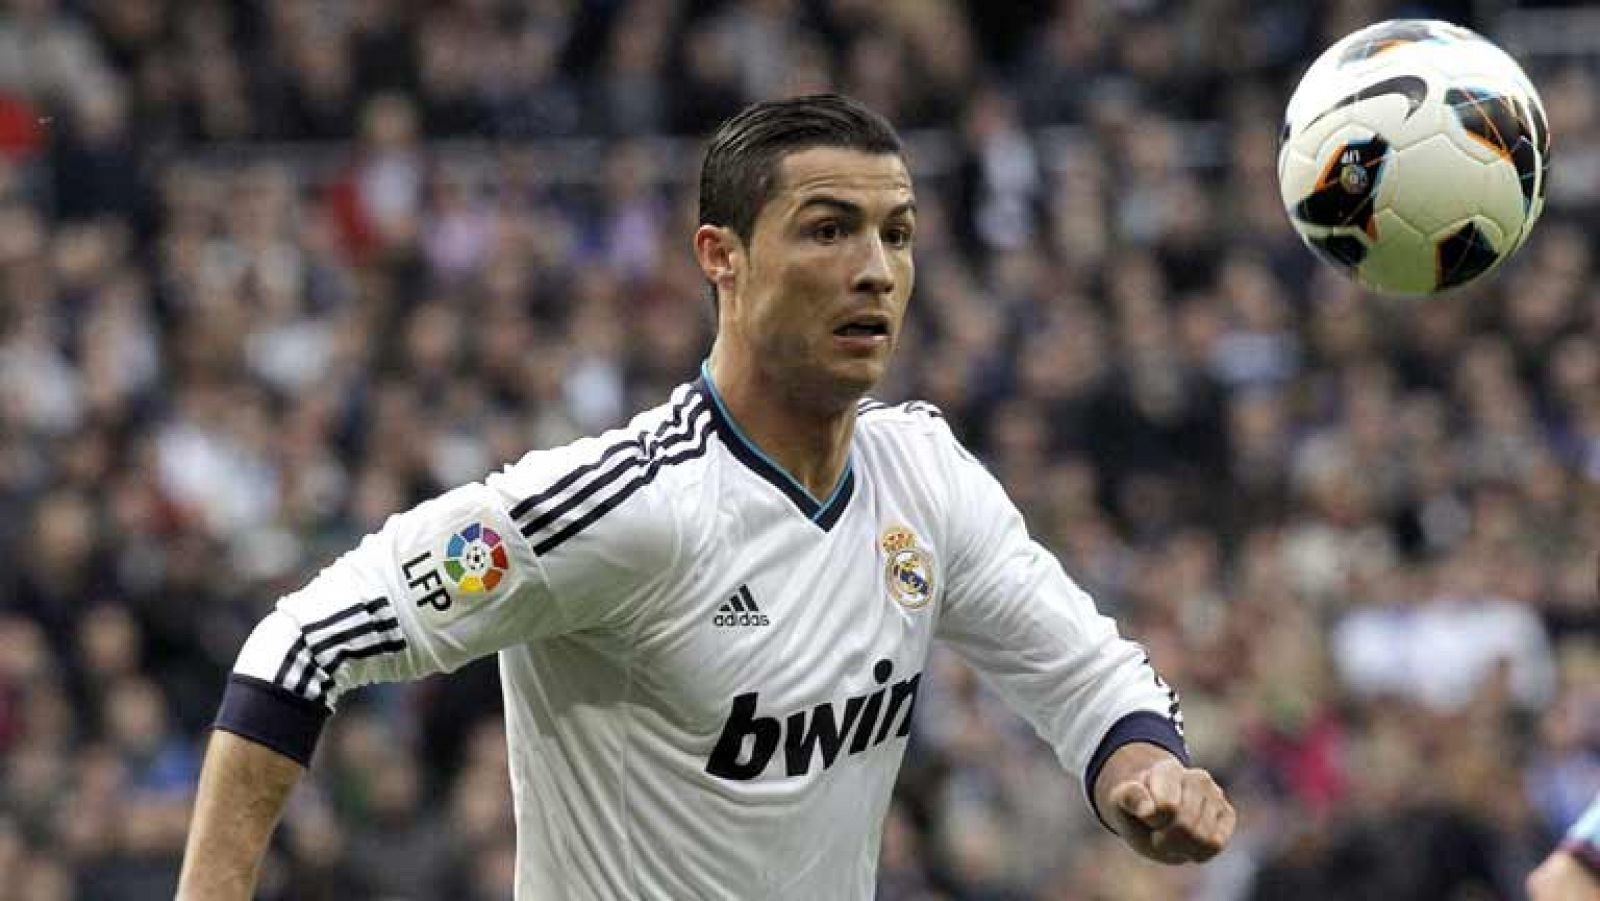 Telediario 1: Cristiano Ronaldo levanta pasiones en Manchester | RTVE Play